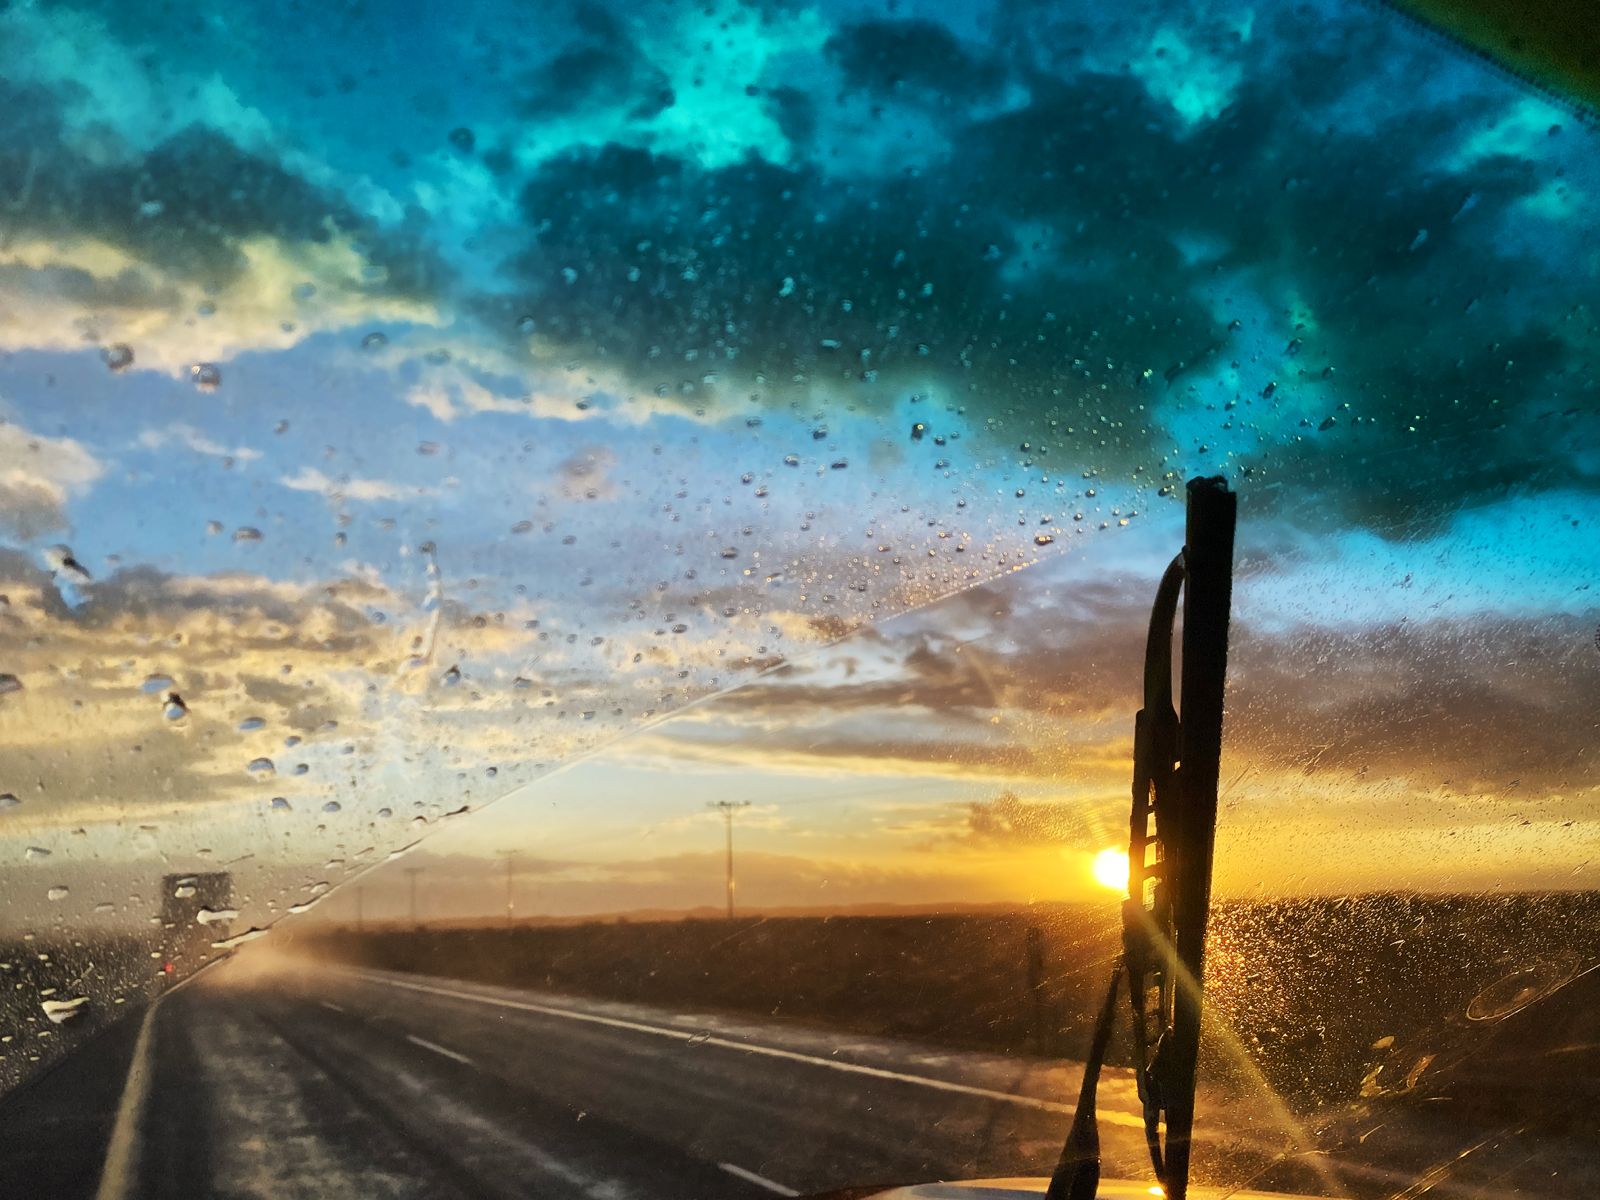 5 ways to ensure leak-free windscreens this summer